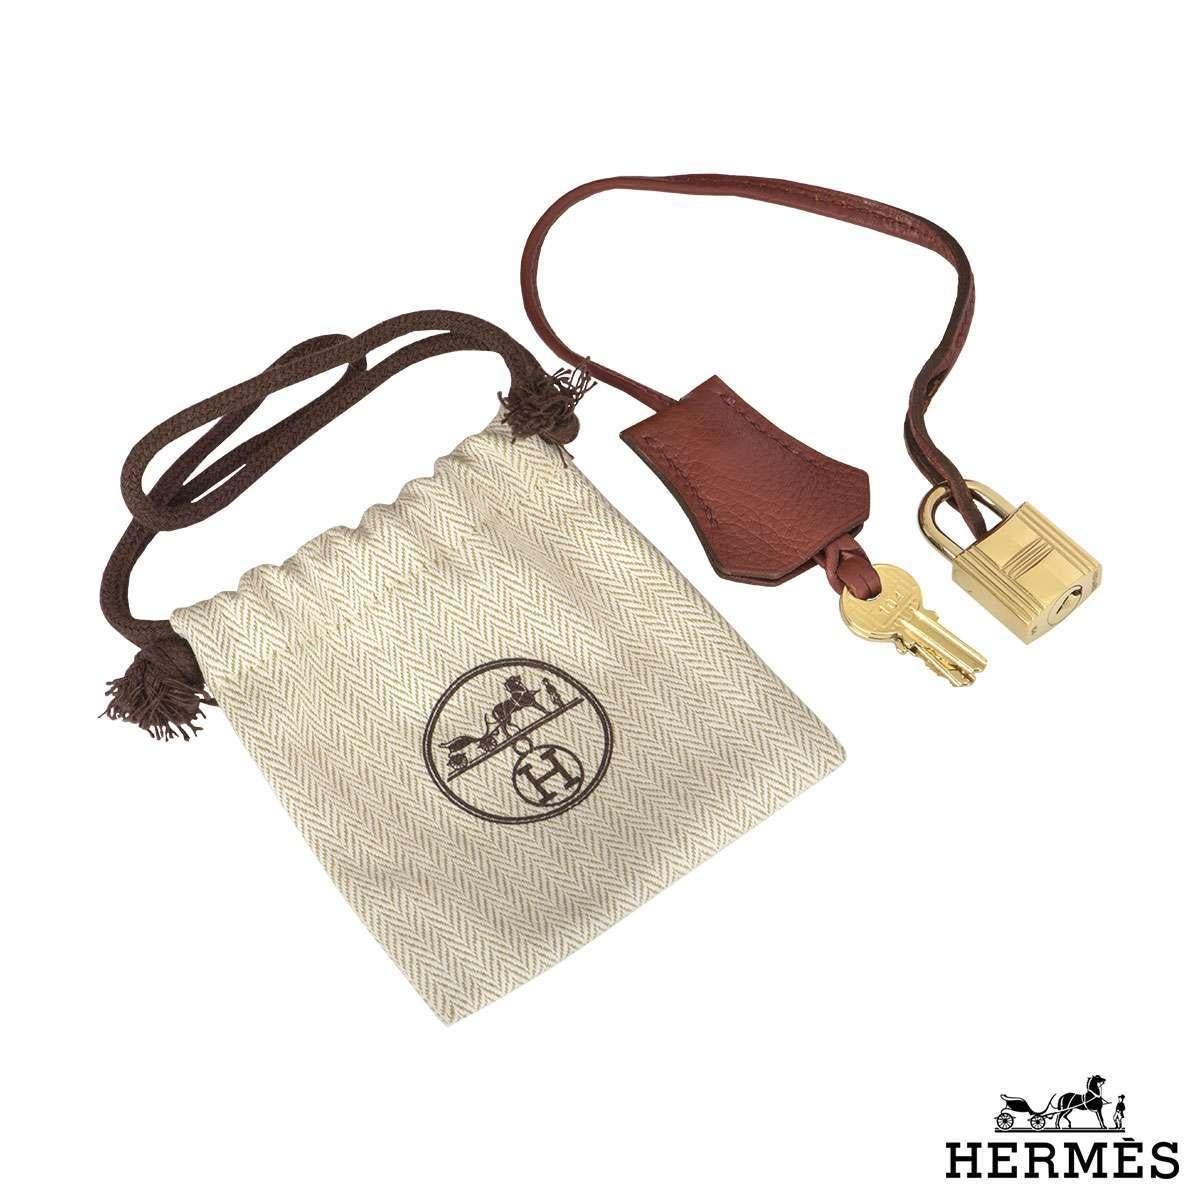 Hermes Birkin 35cm Sienne Handbag 1